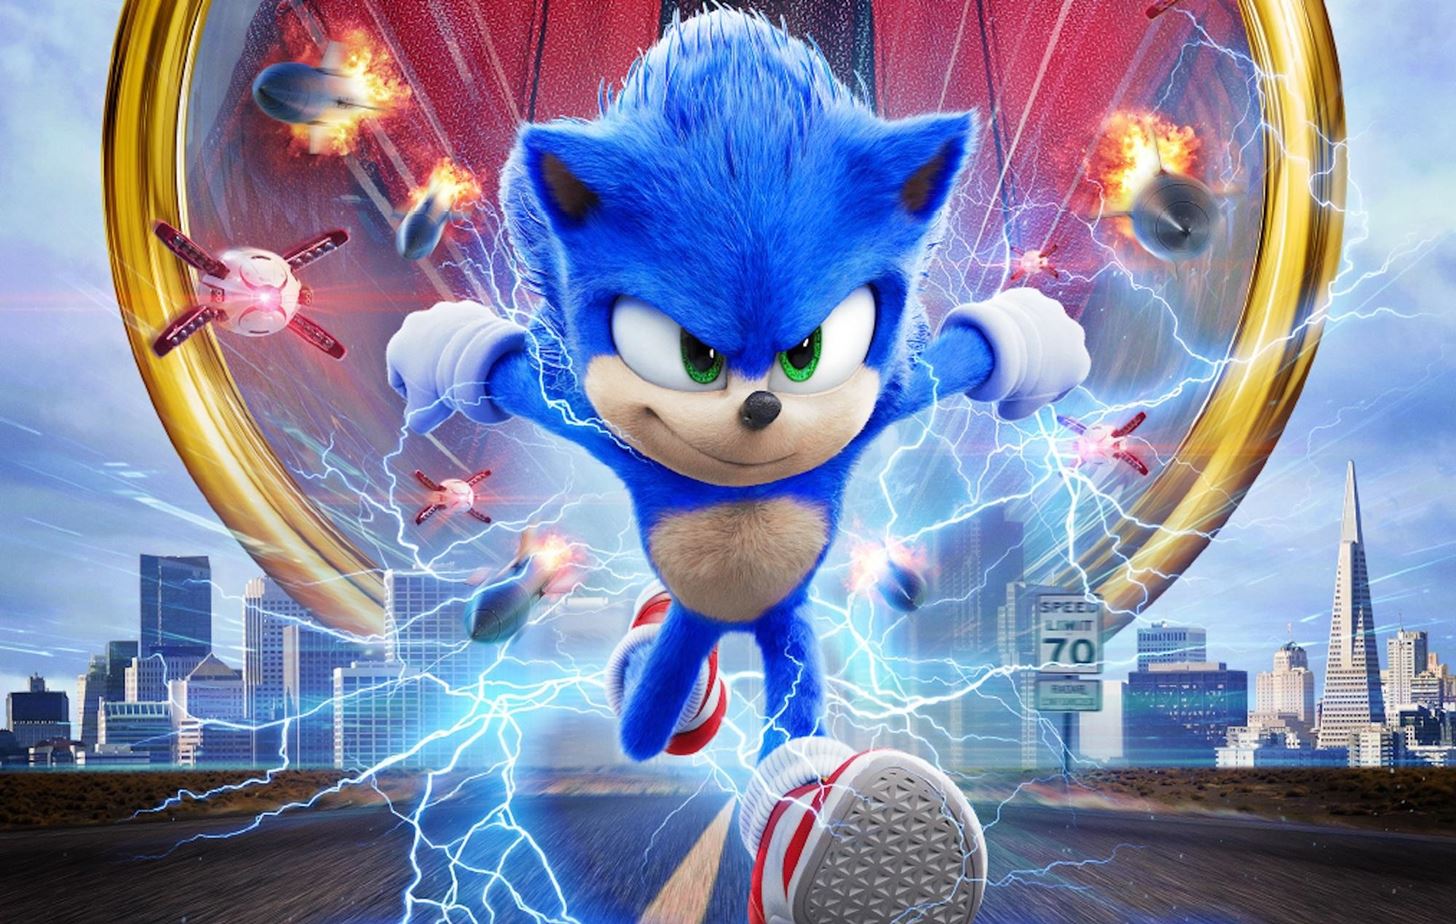 [123Movie] Sonic the Hedgehog 2020 Full Movie Online FREE « Digiwonk :: Gadget Hacks